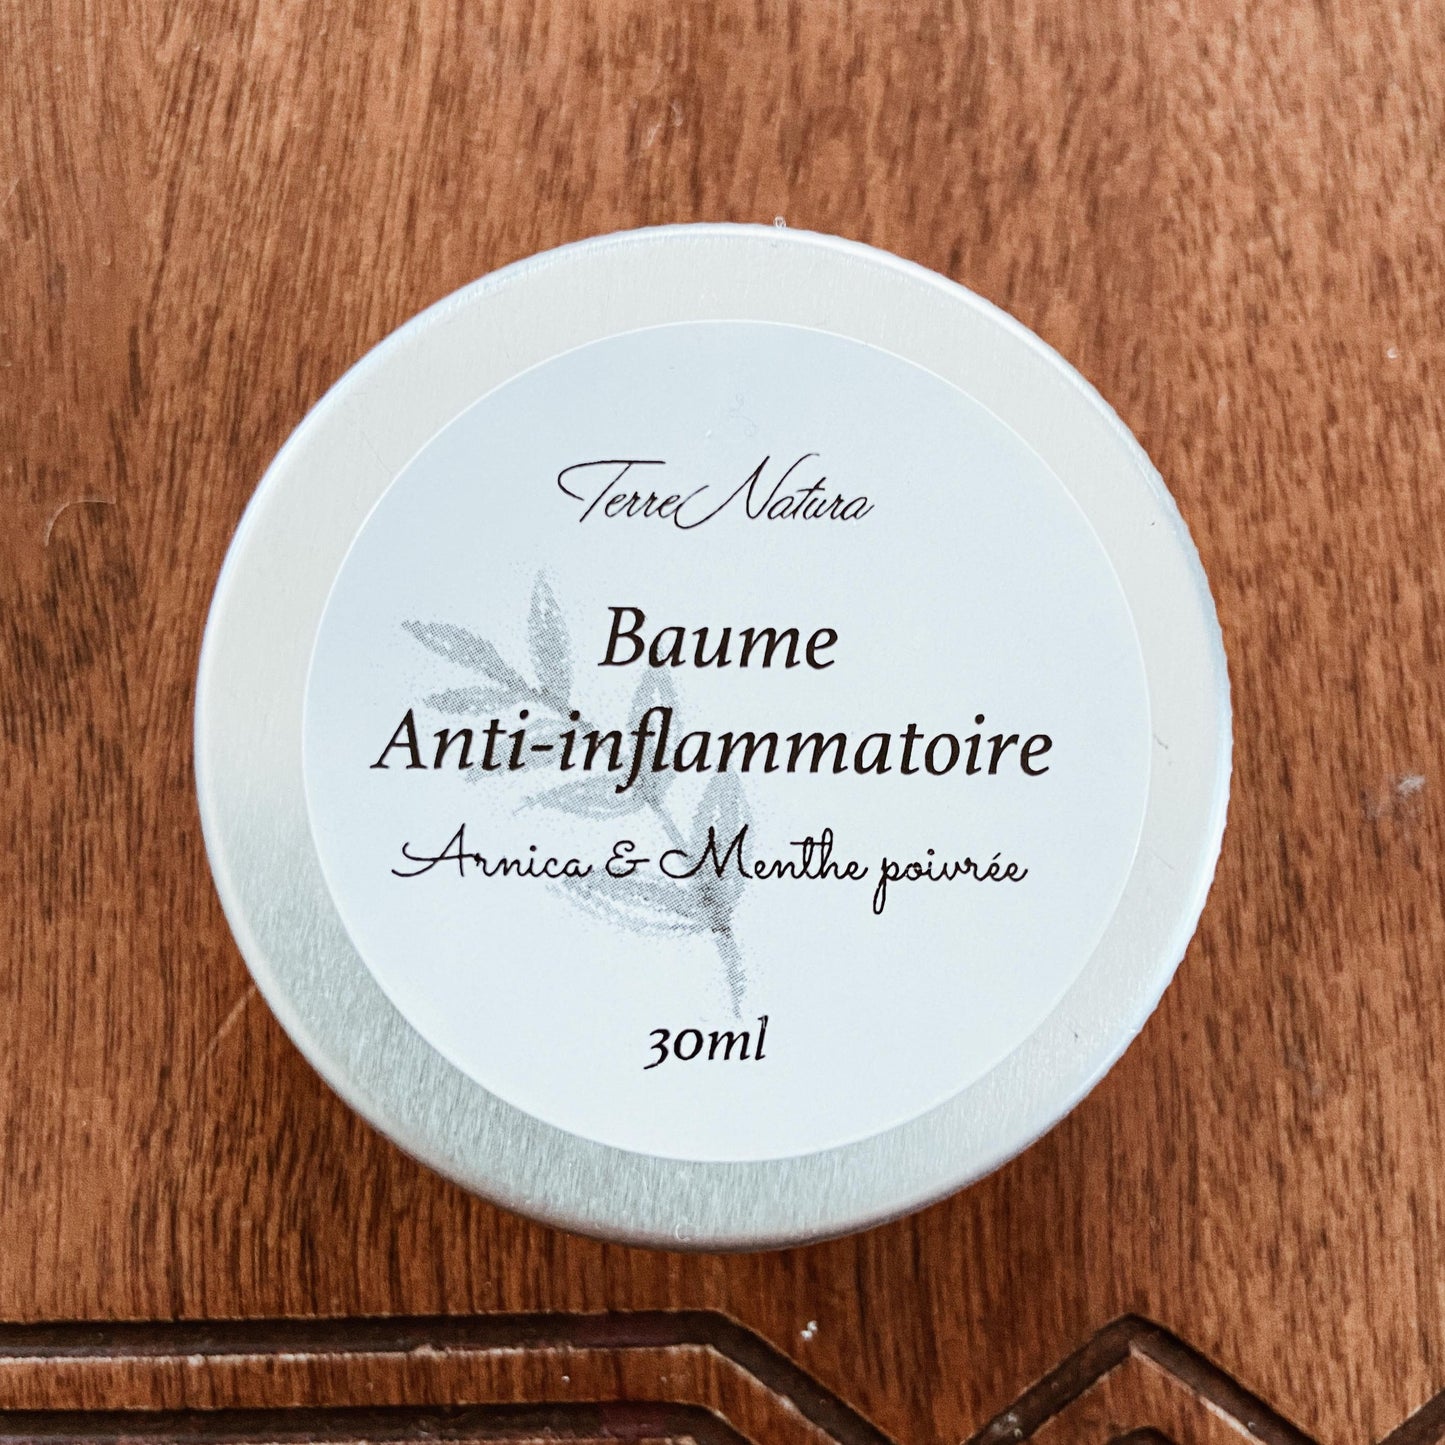 Anti-inflammatory essential oil balm